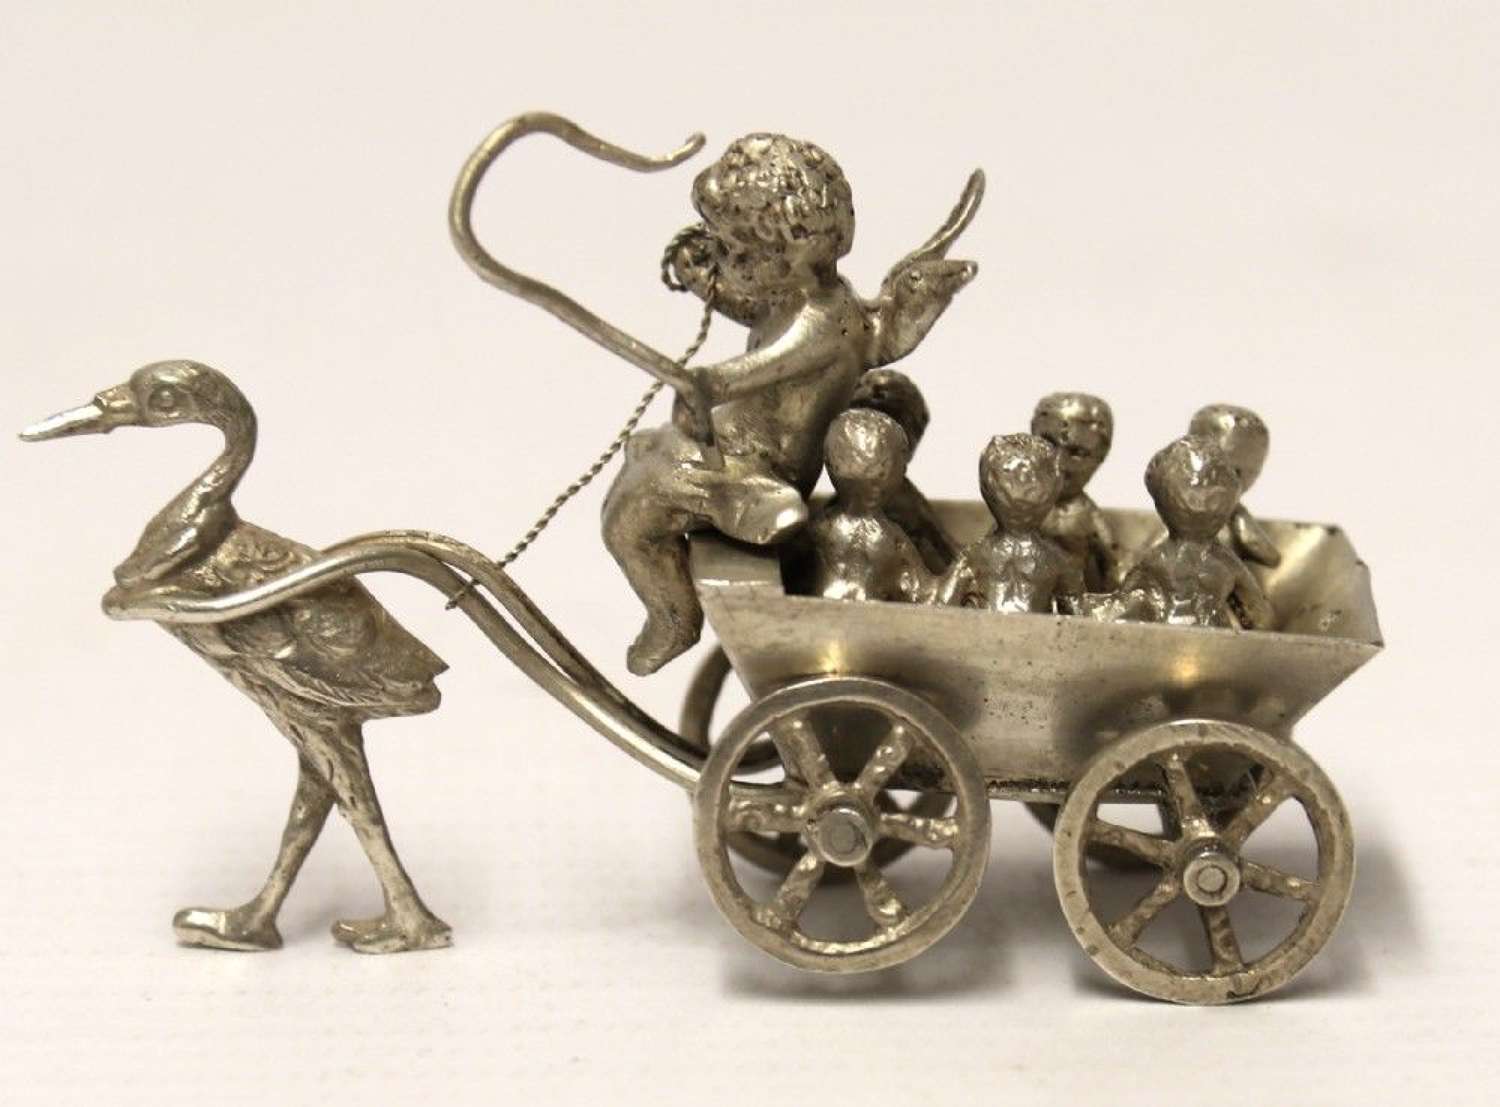 Miniature Silver Figure Group With Cherub